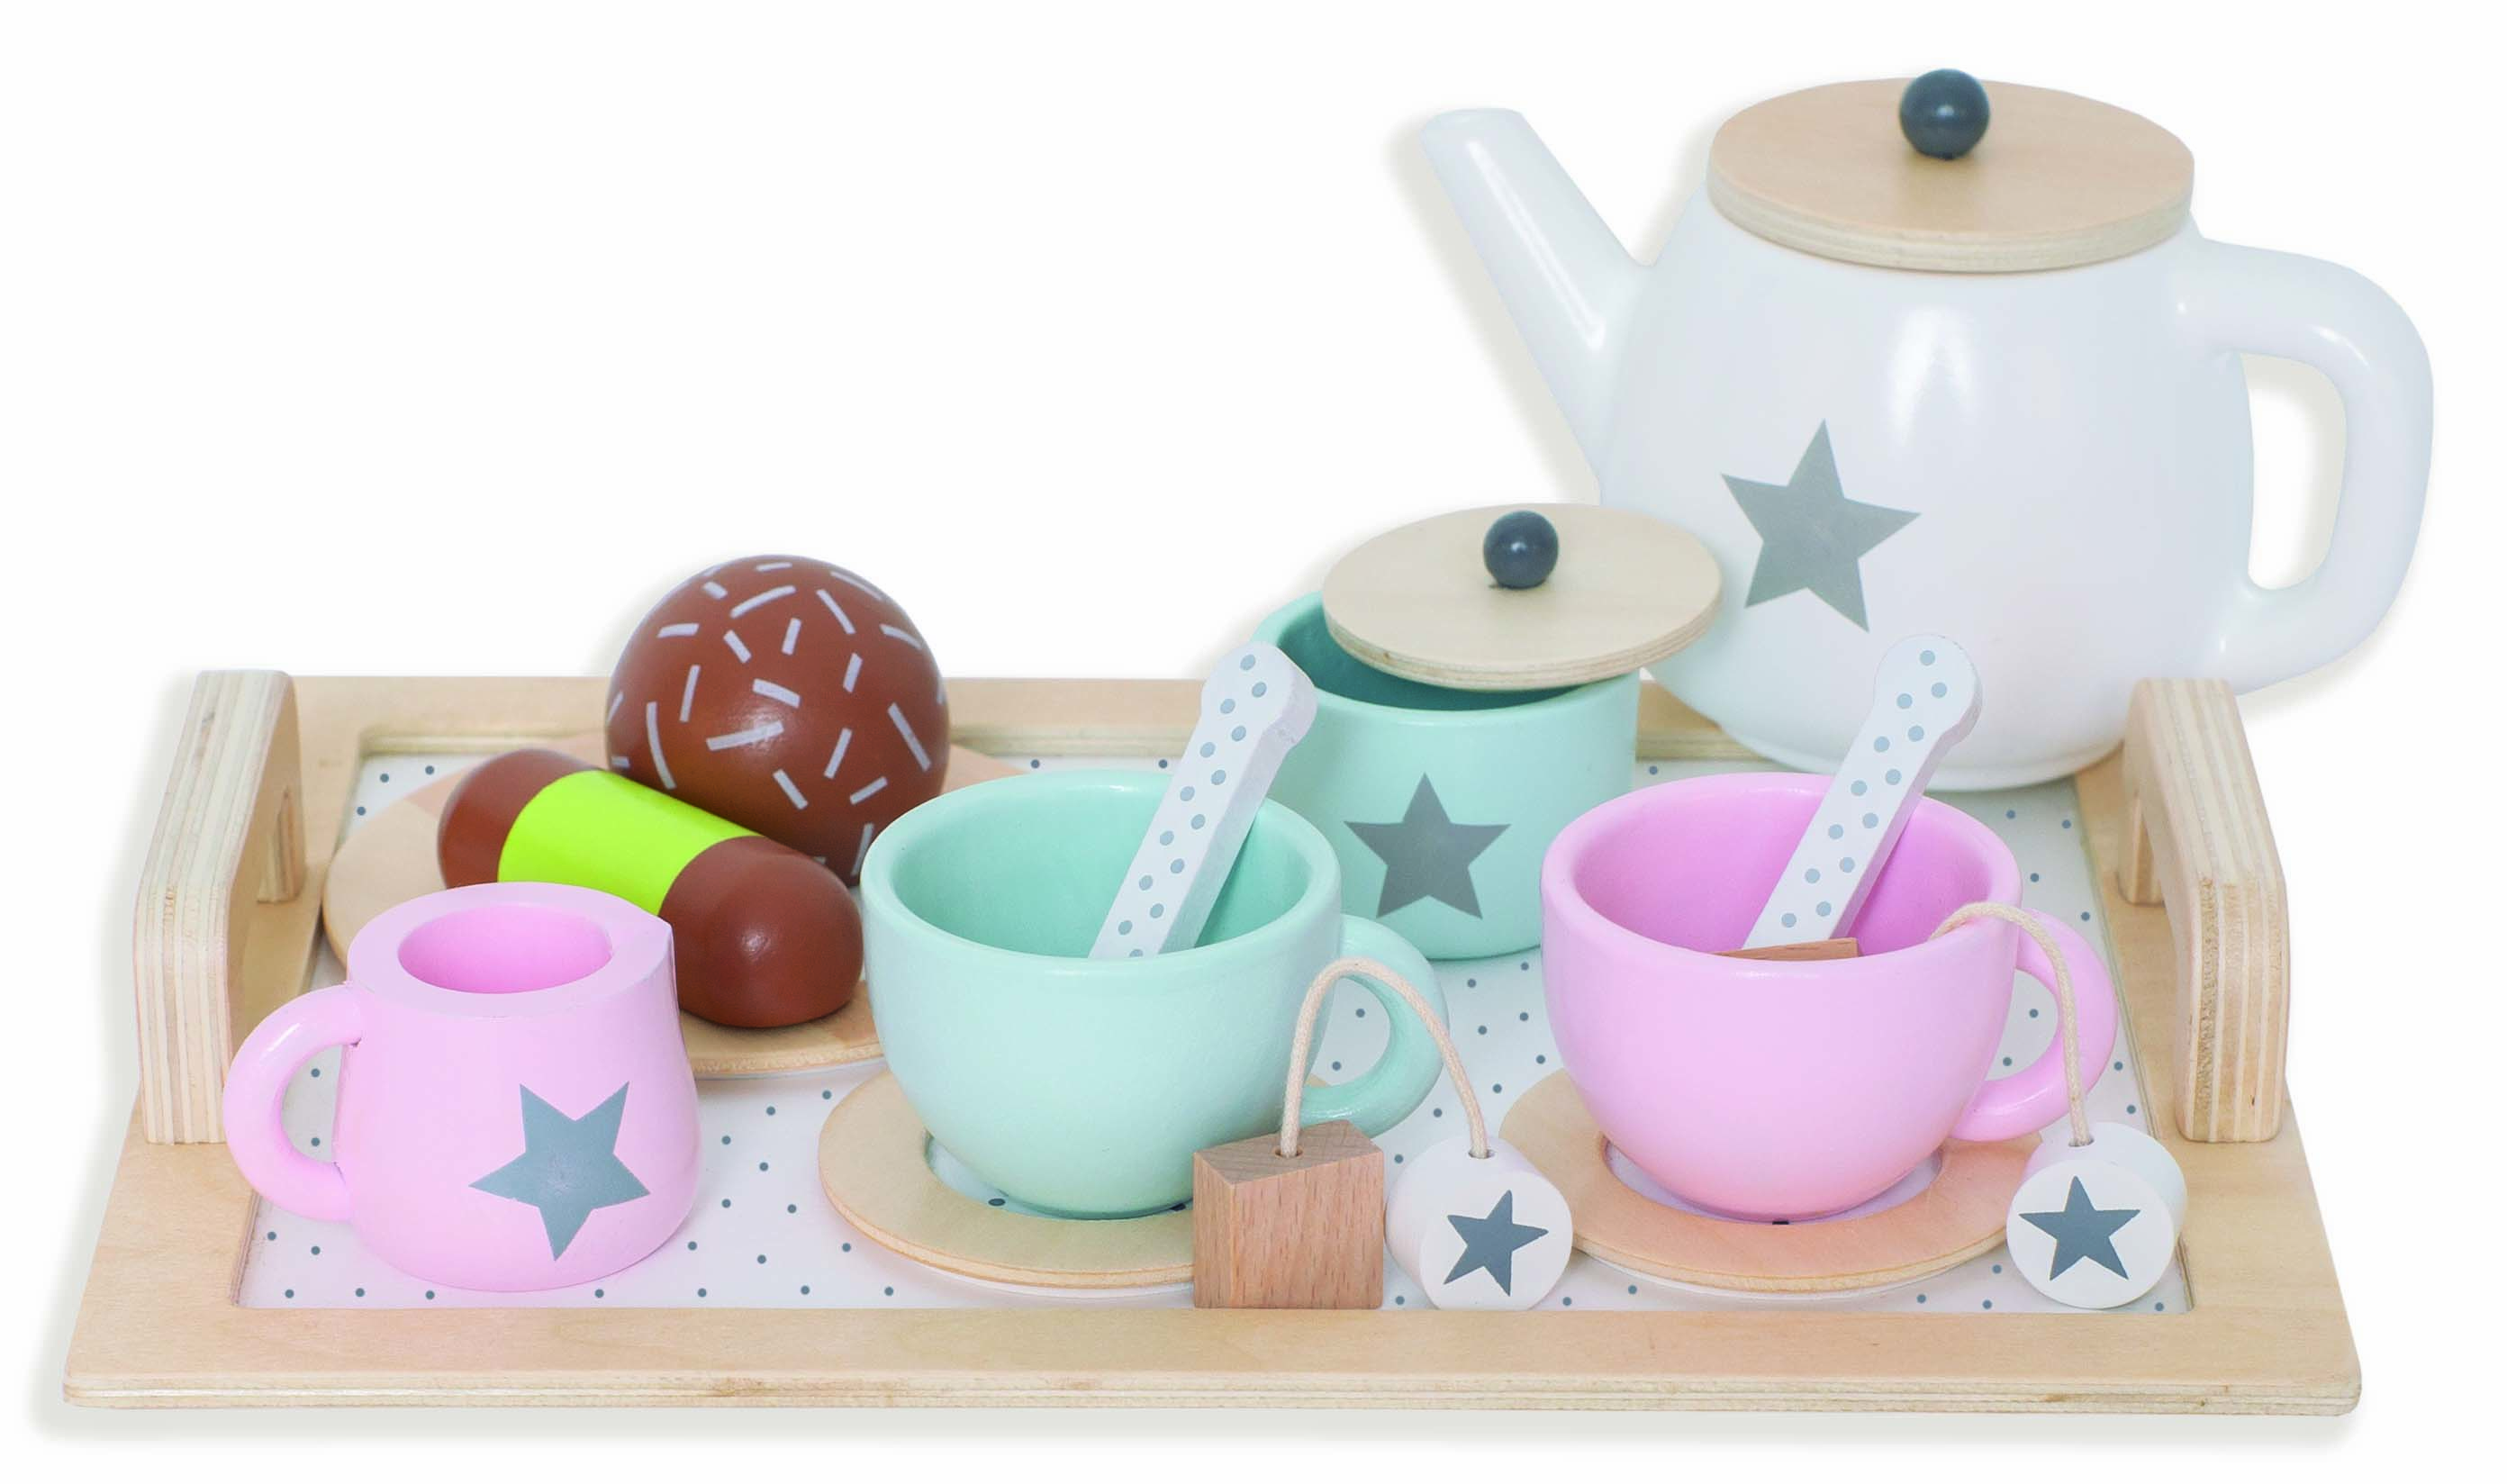 Starmood Holz Mini Tee-Set Spielzeug Tasse Teekannen Tablett für Kinder Kinder Küche Rollenspiel